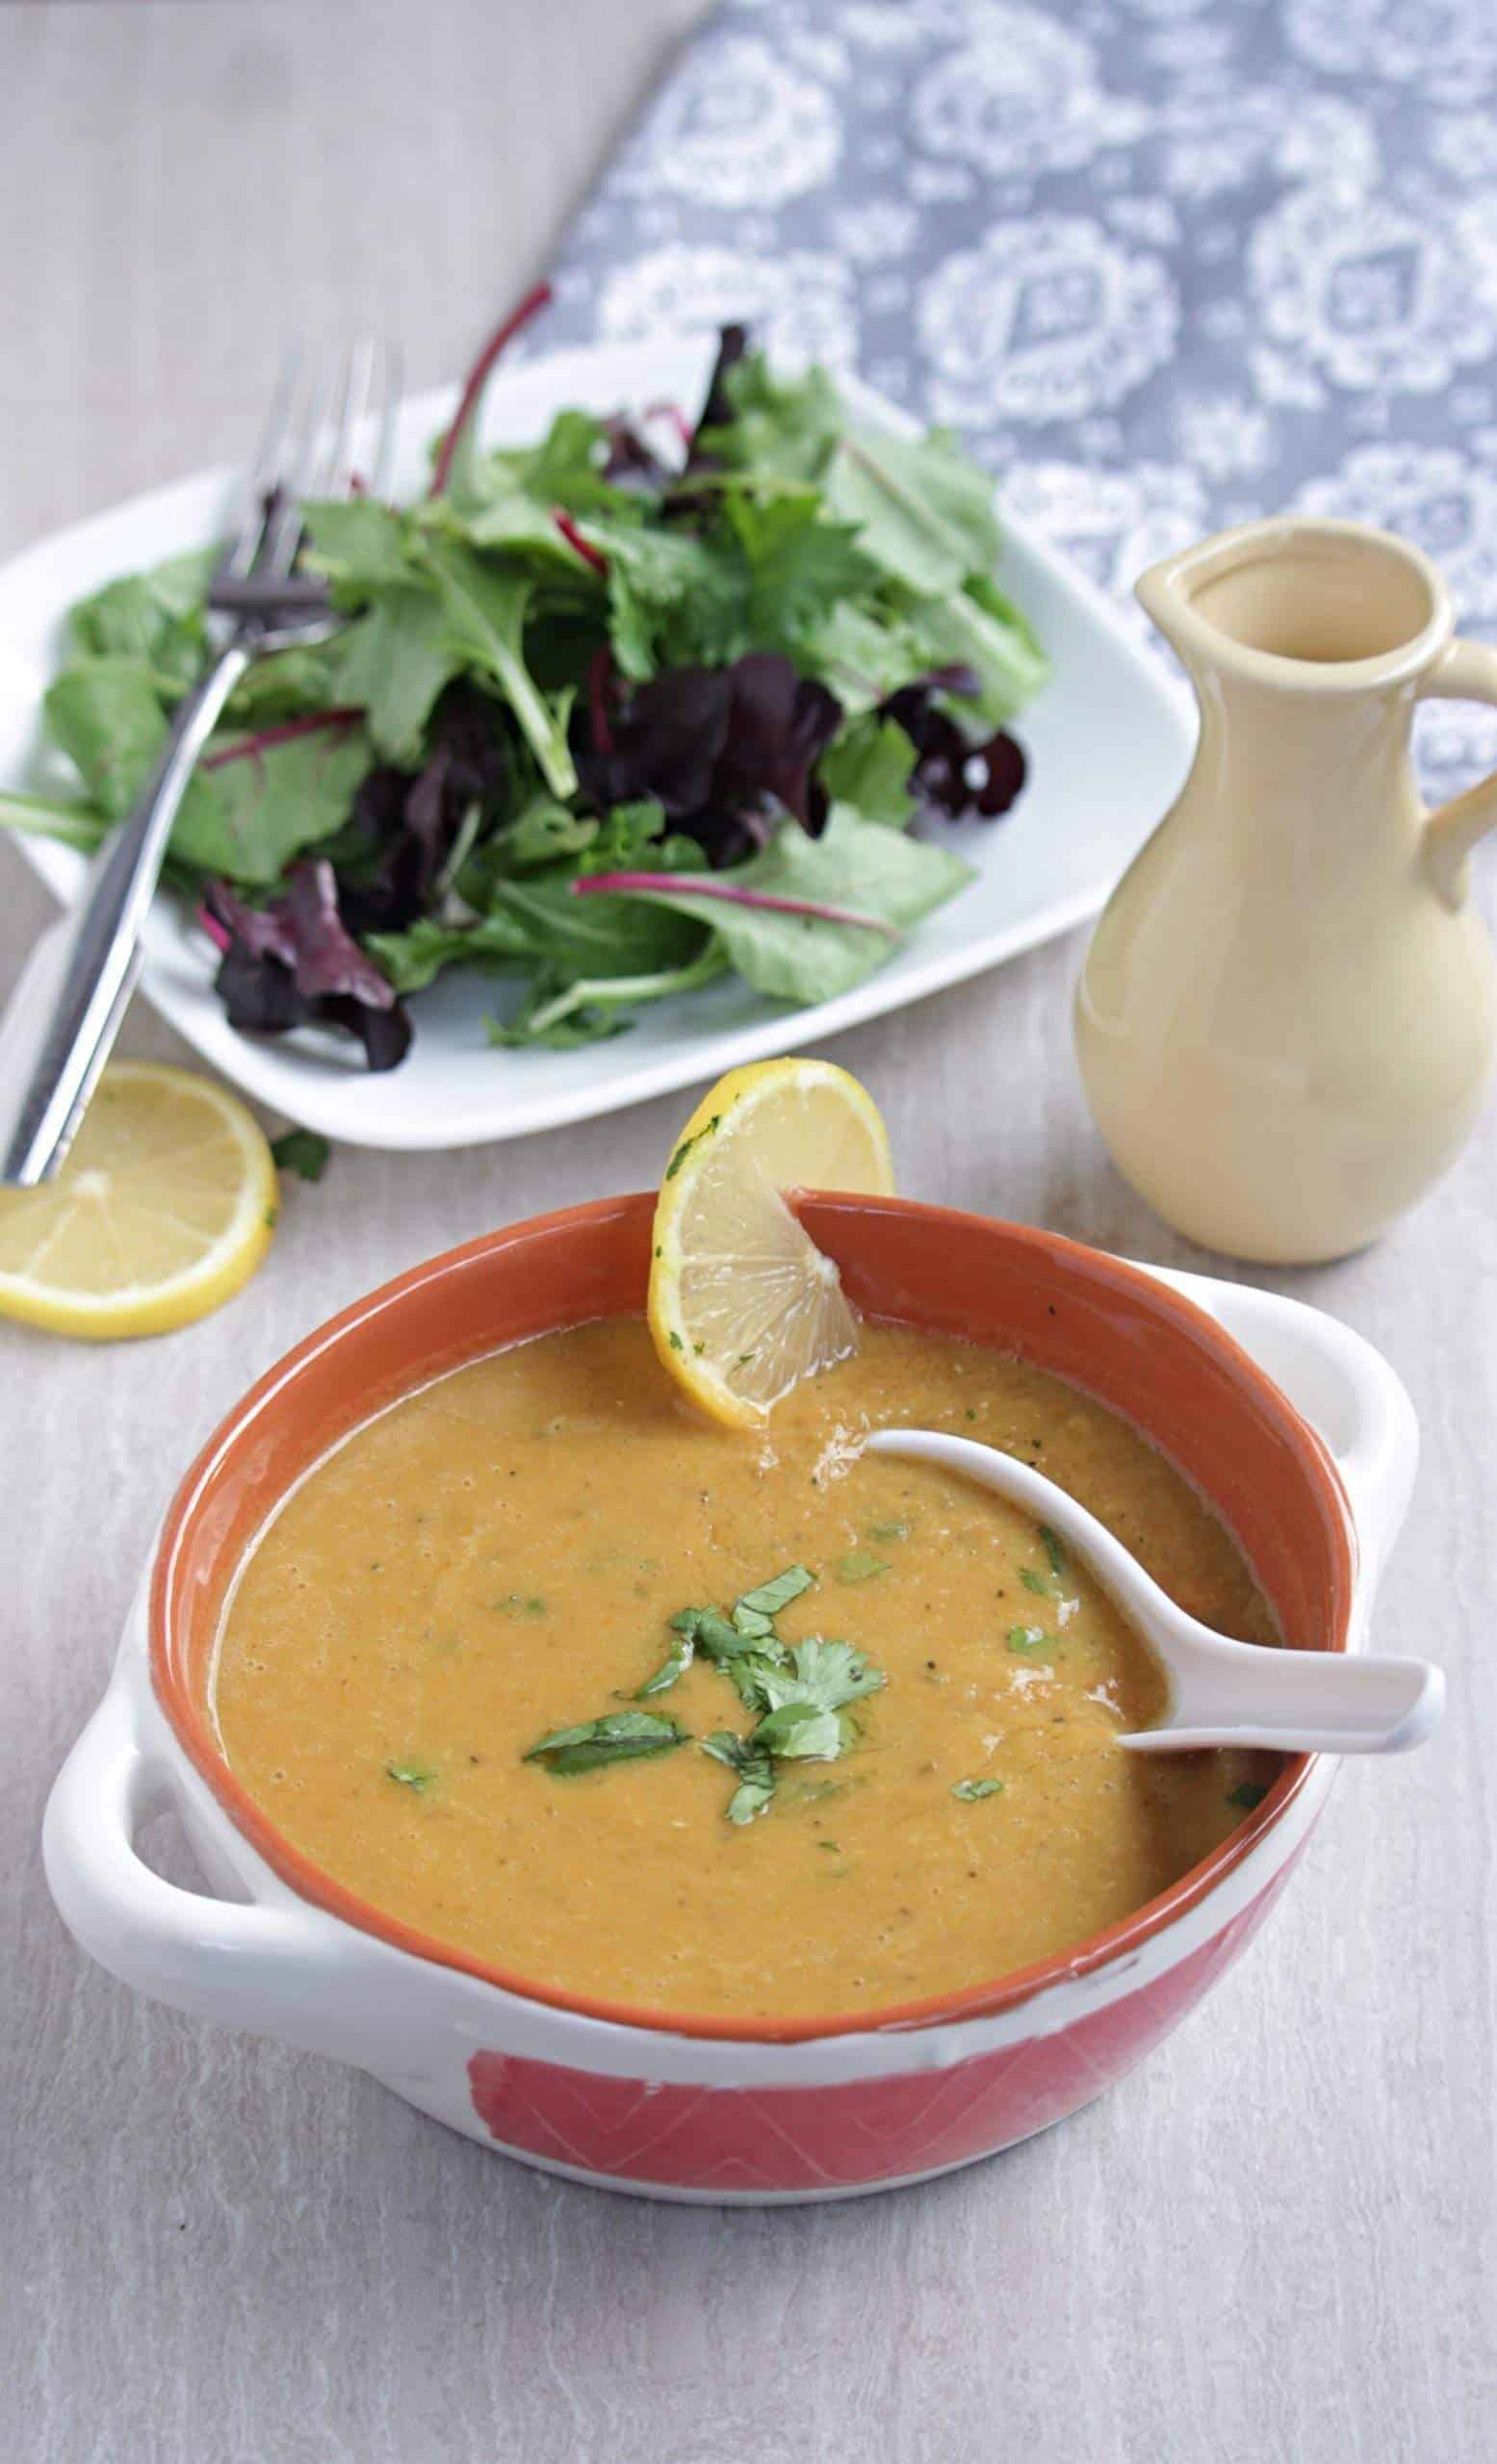 How to make vegan and GF lentil soup